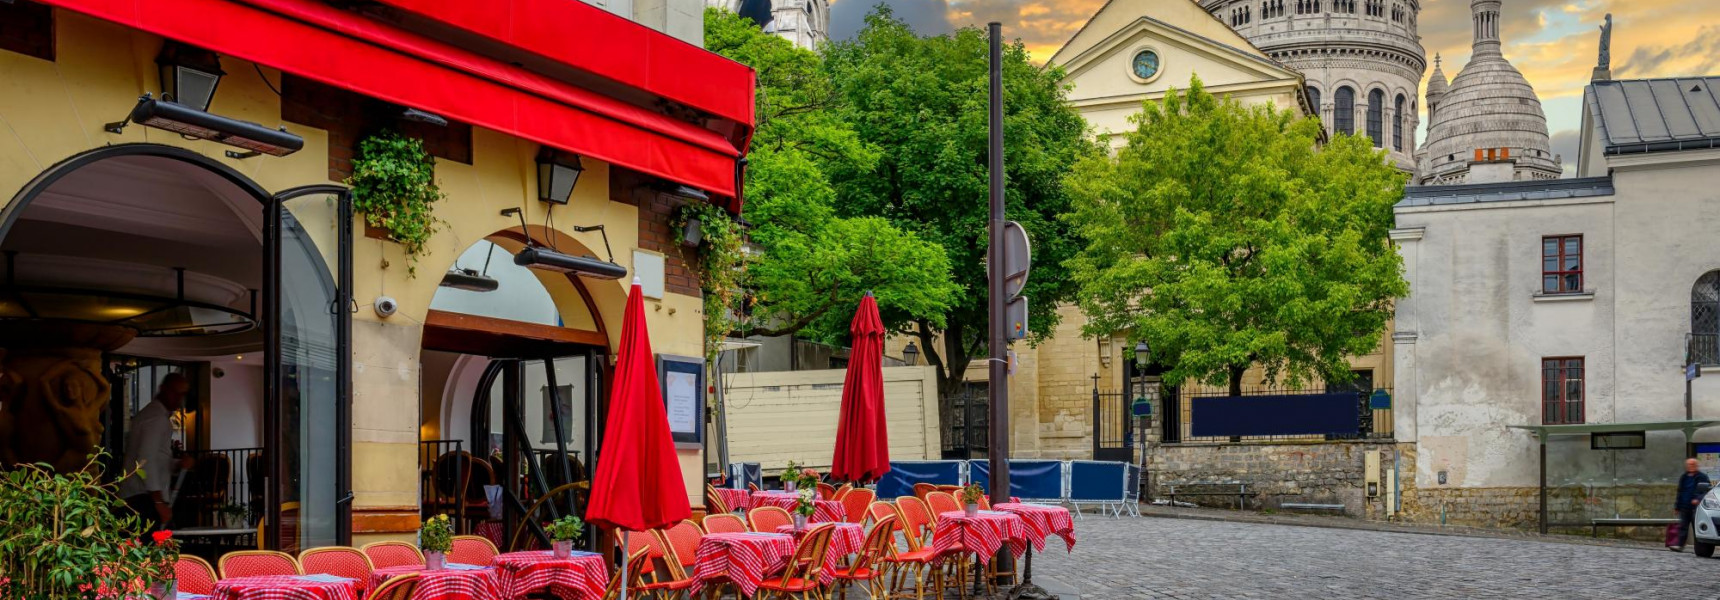 The Best Restaurants in Paris